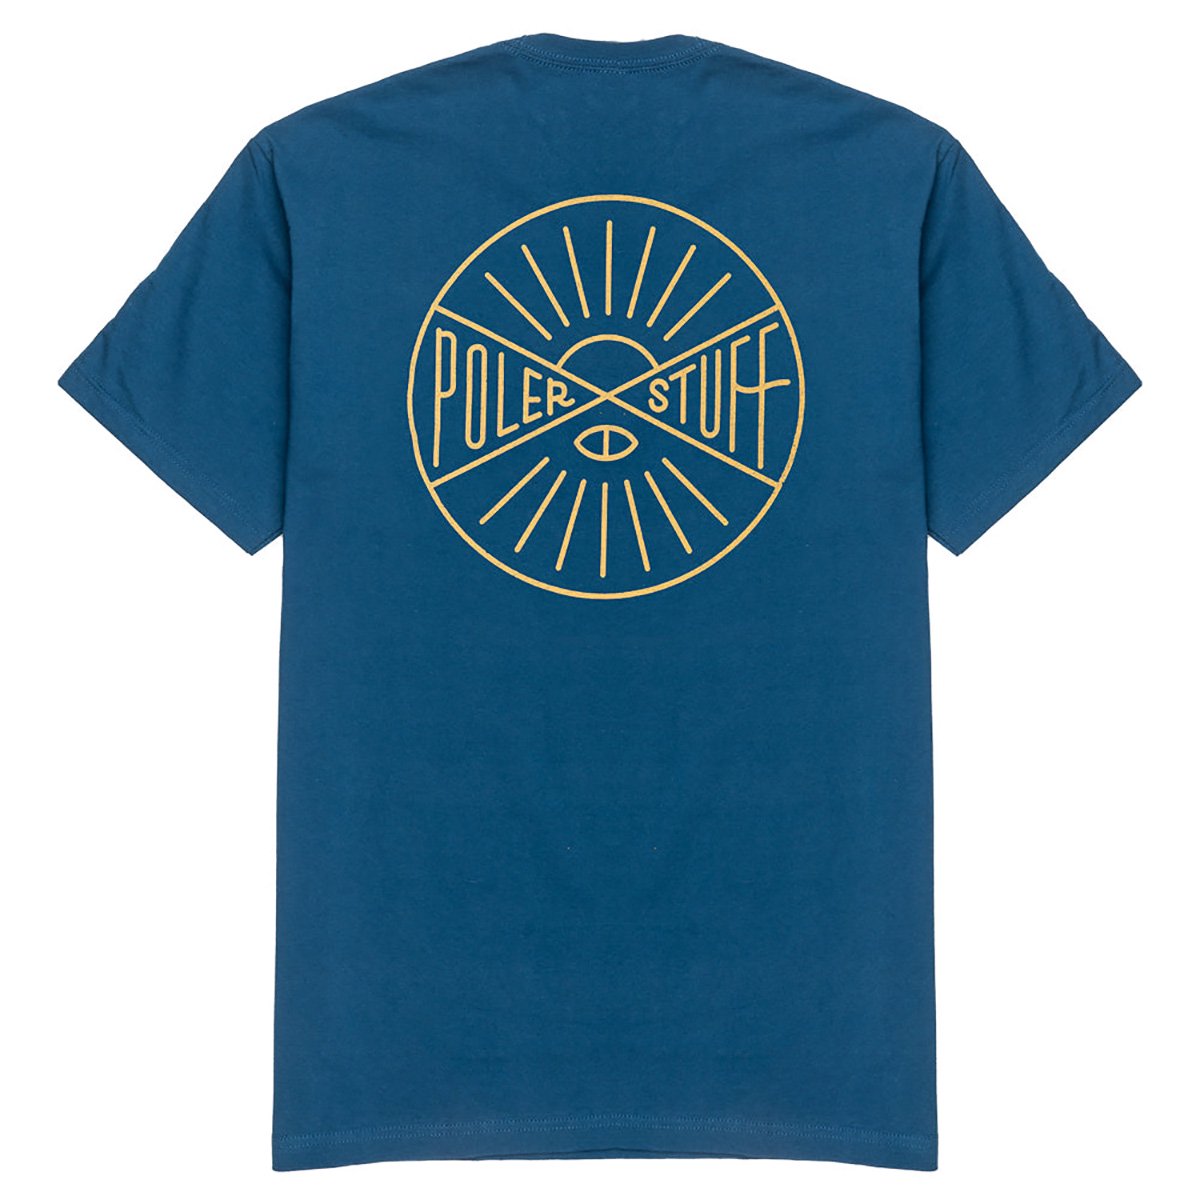 Poler Stuff Sunray T-Shirt - Cool Blue